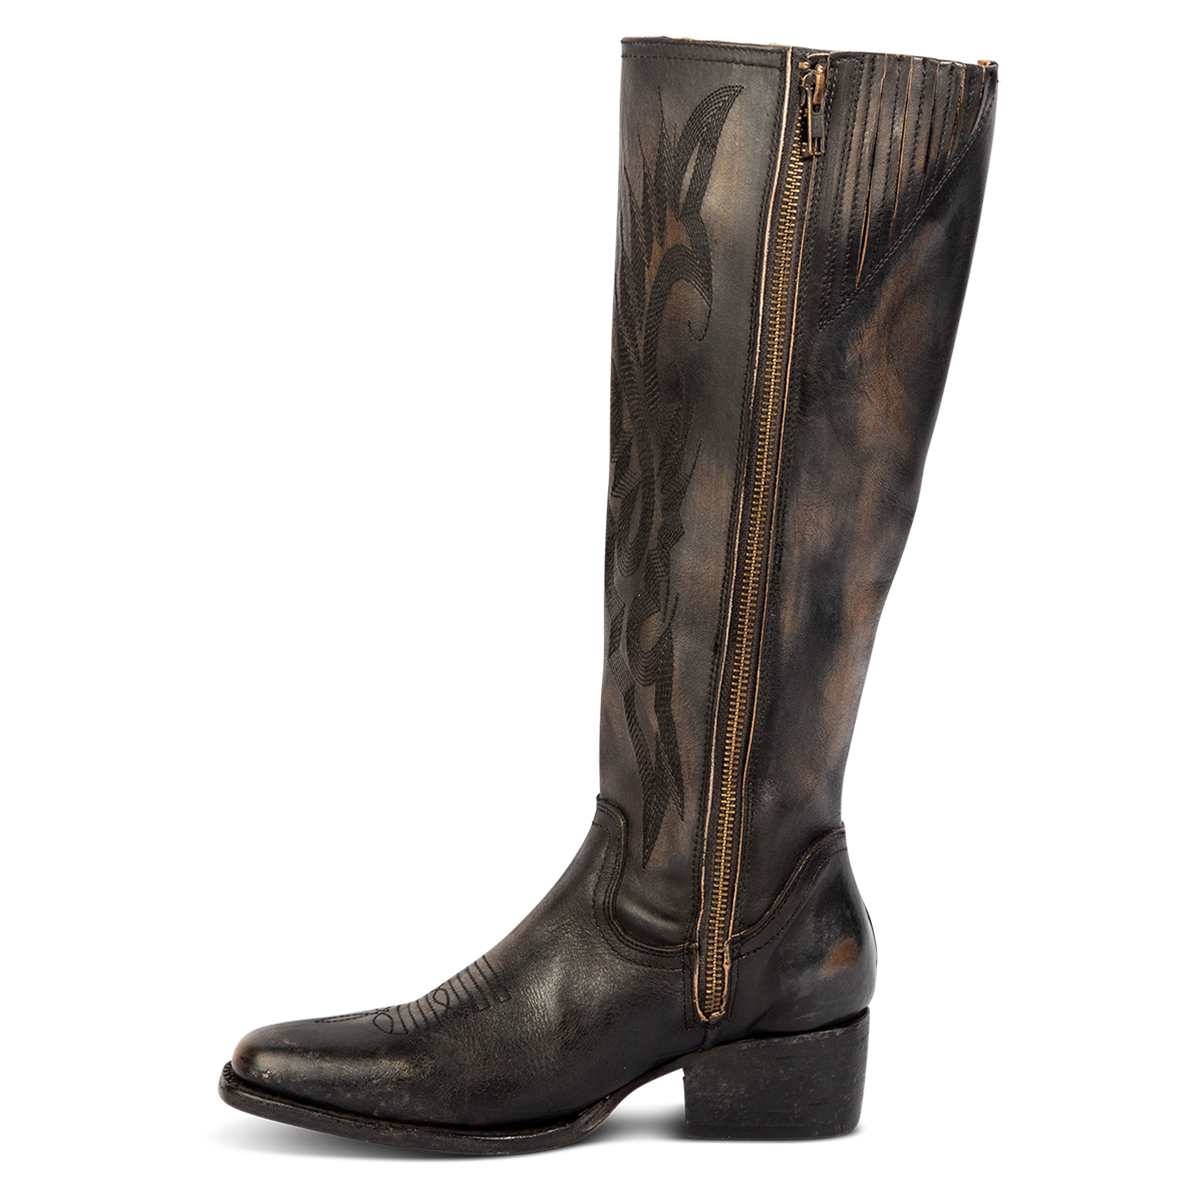 Inside view showing a low block heel, inside working brass zipper, and gore detailing on FREEBIRD women's Montana black leather boot